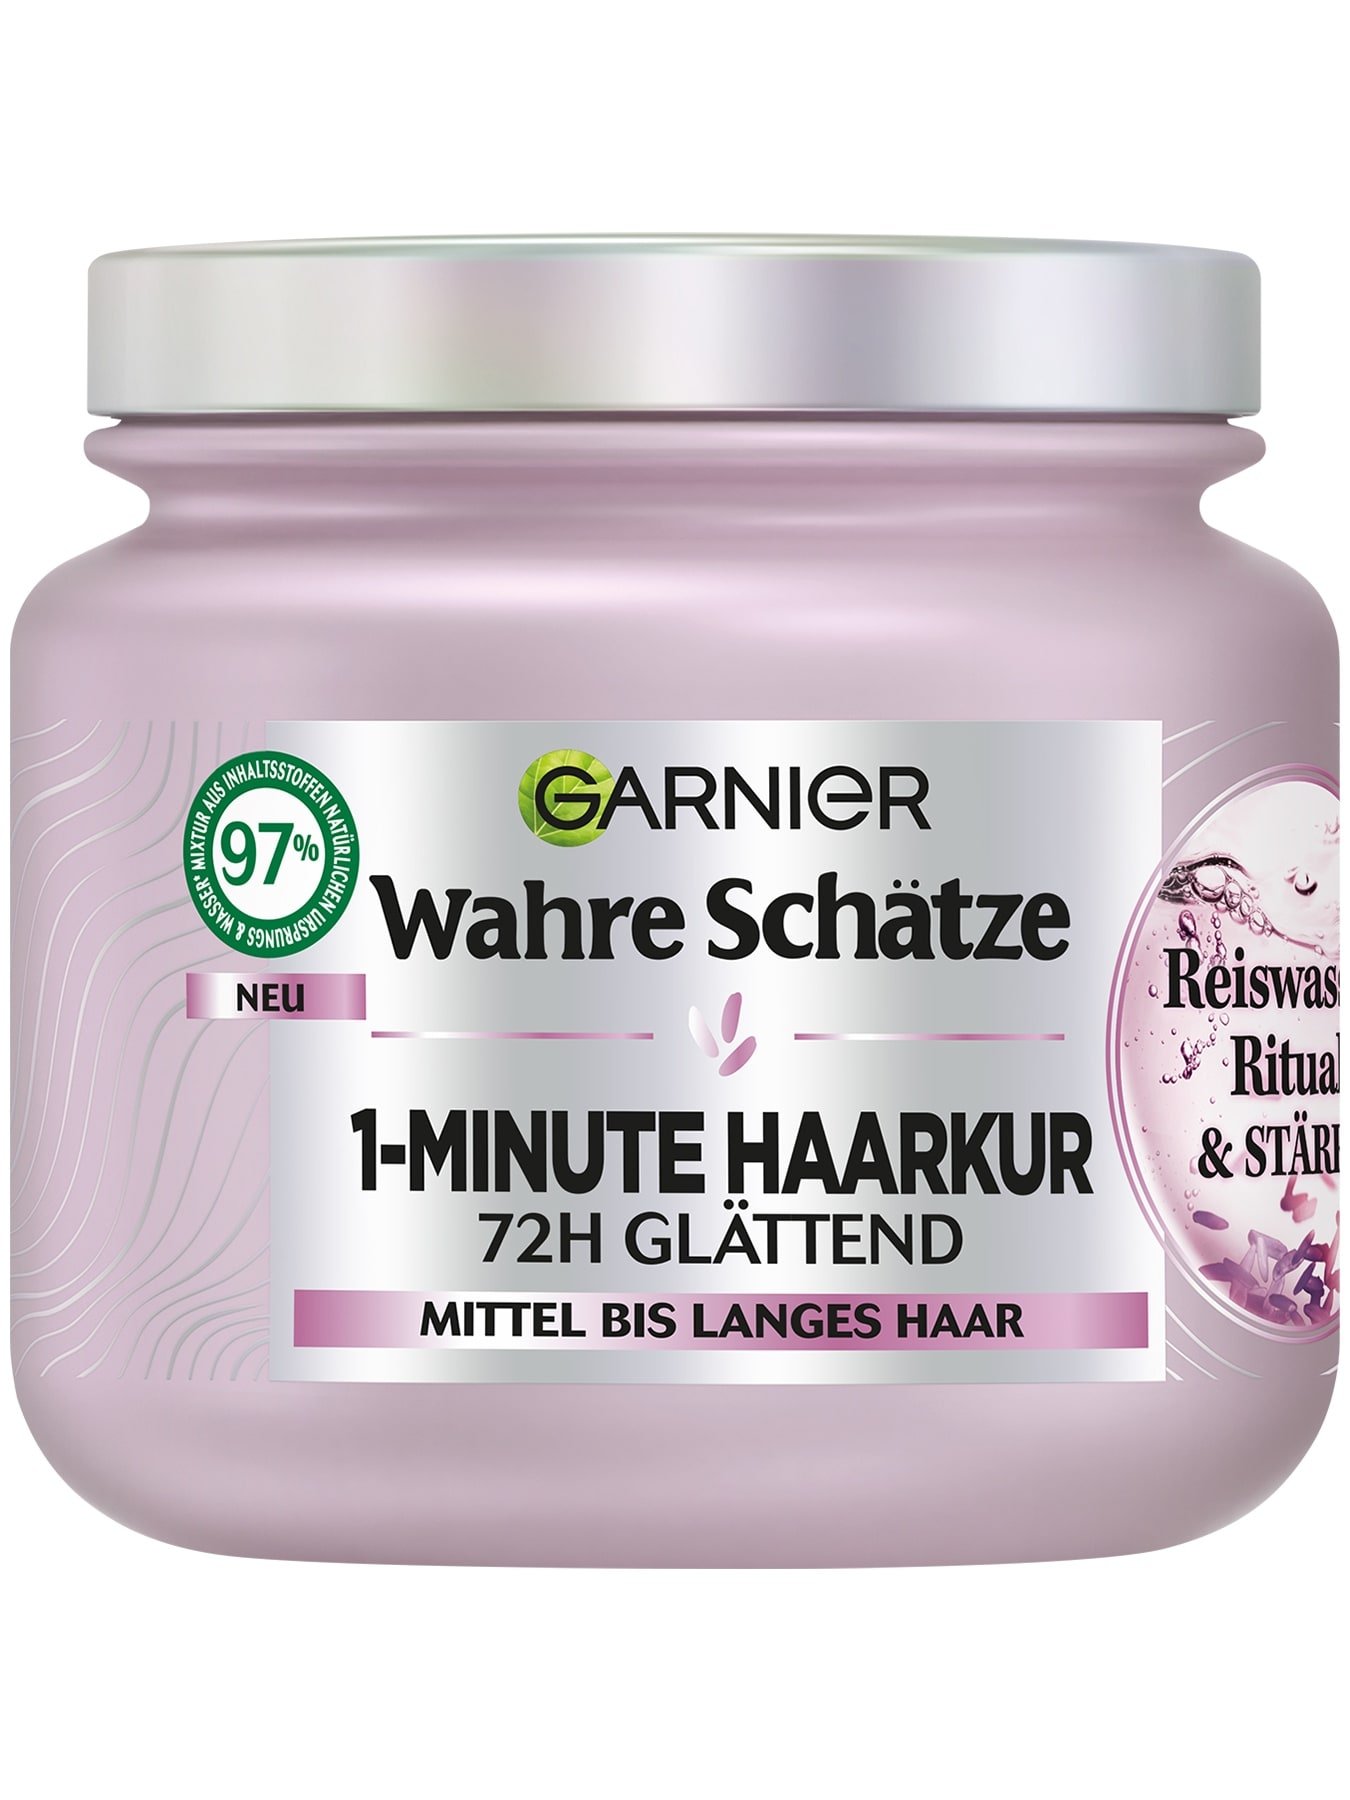 Garnier Wahre Schätze Reiswasser Ritual & Stärke 1-Minute glättende Haarkur - Produktabbildung